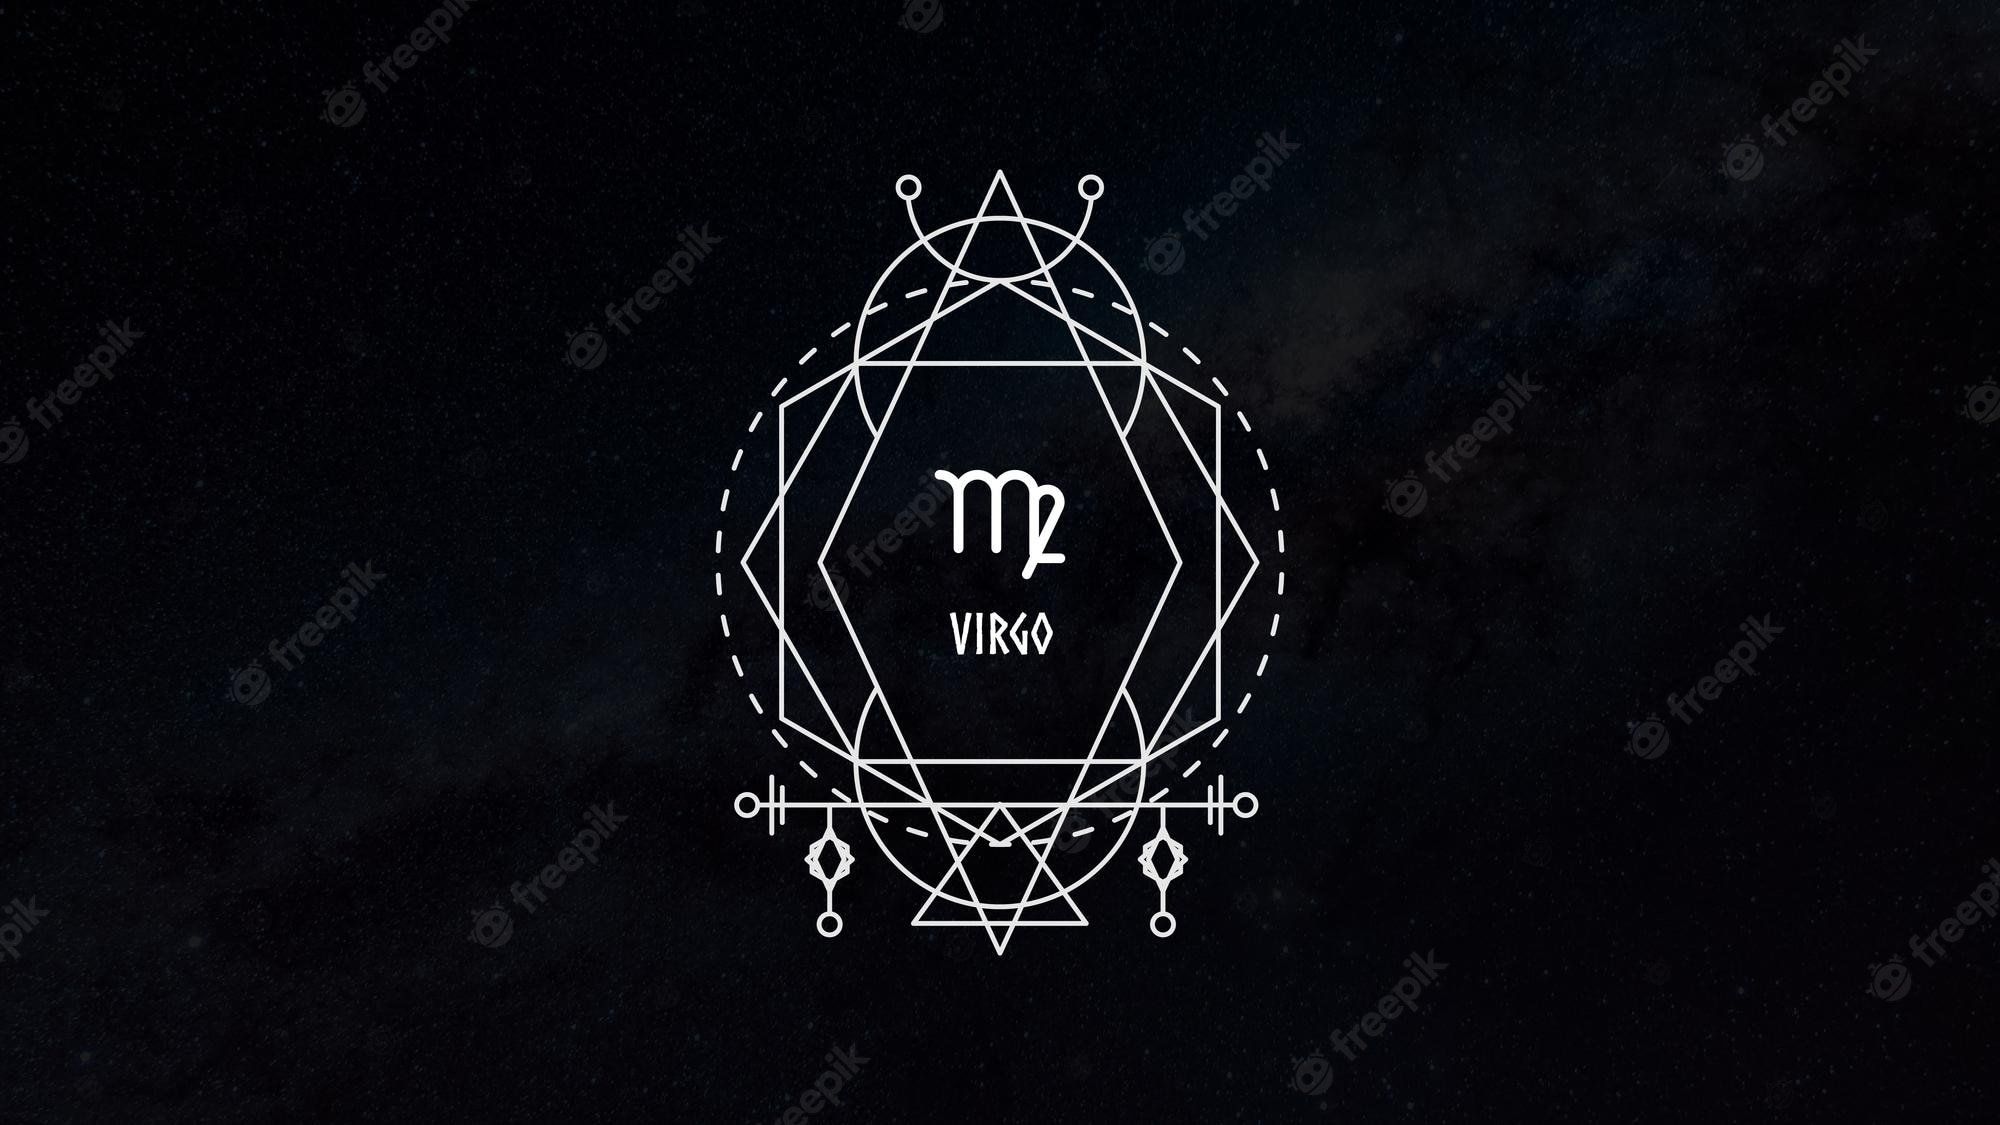 A black and white astrology logo - Virgo